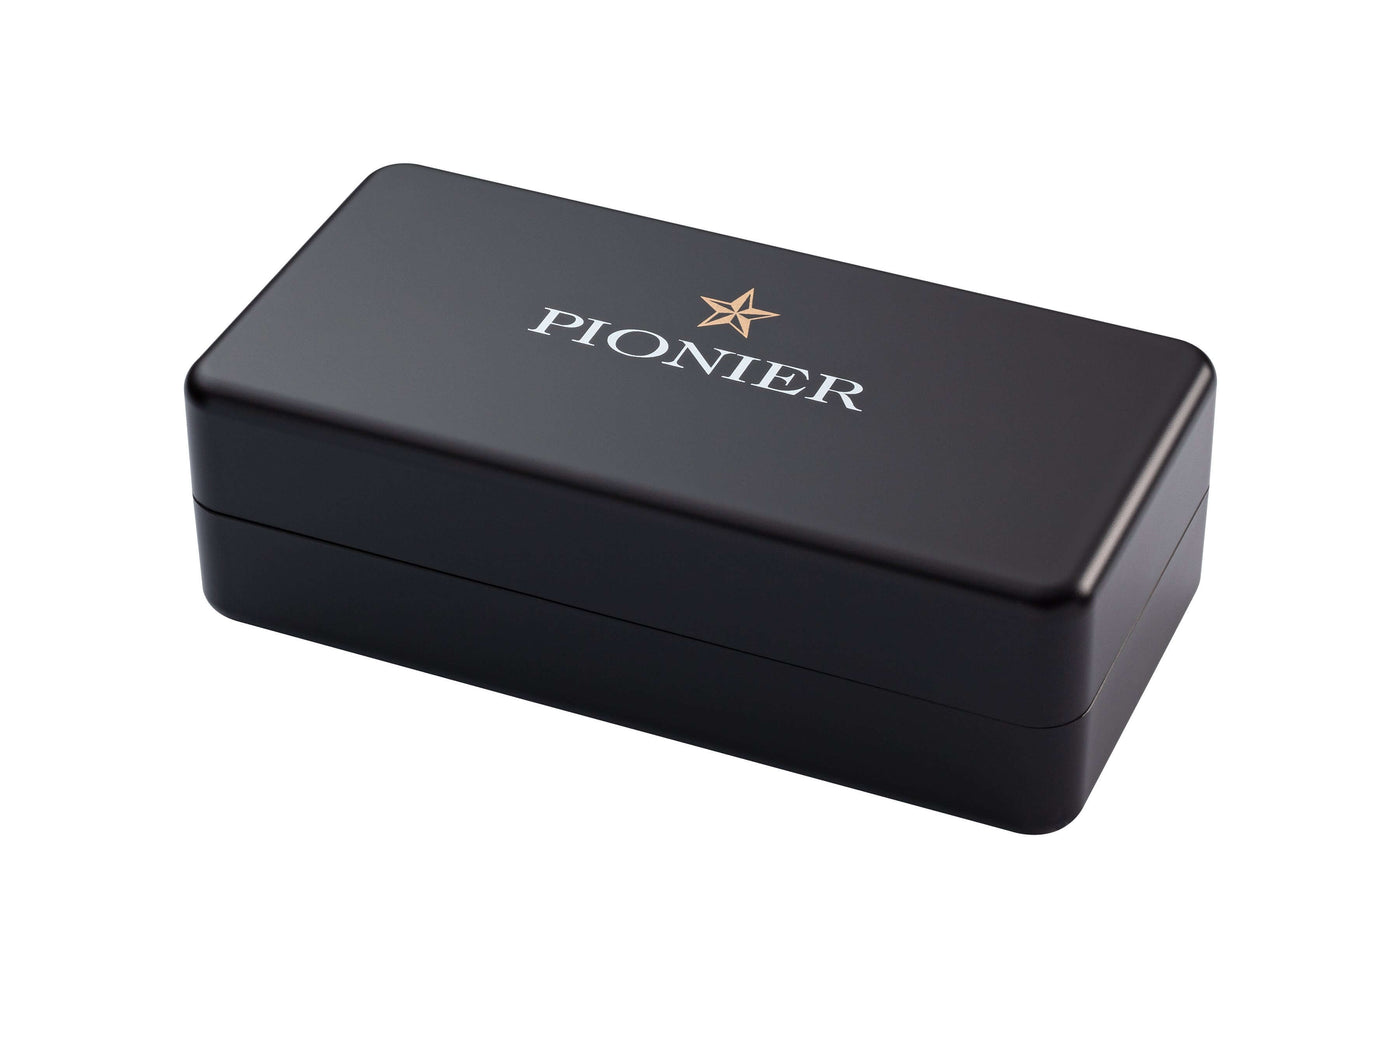 Original Pionier black box with the Pionier logo imprinted on top.